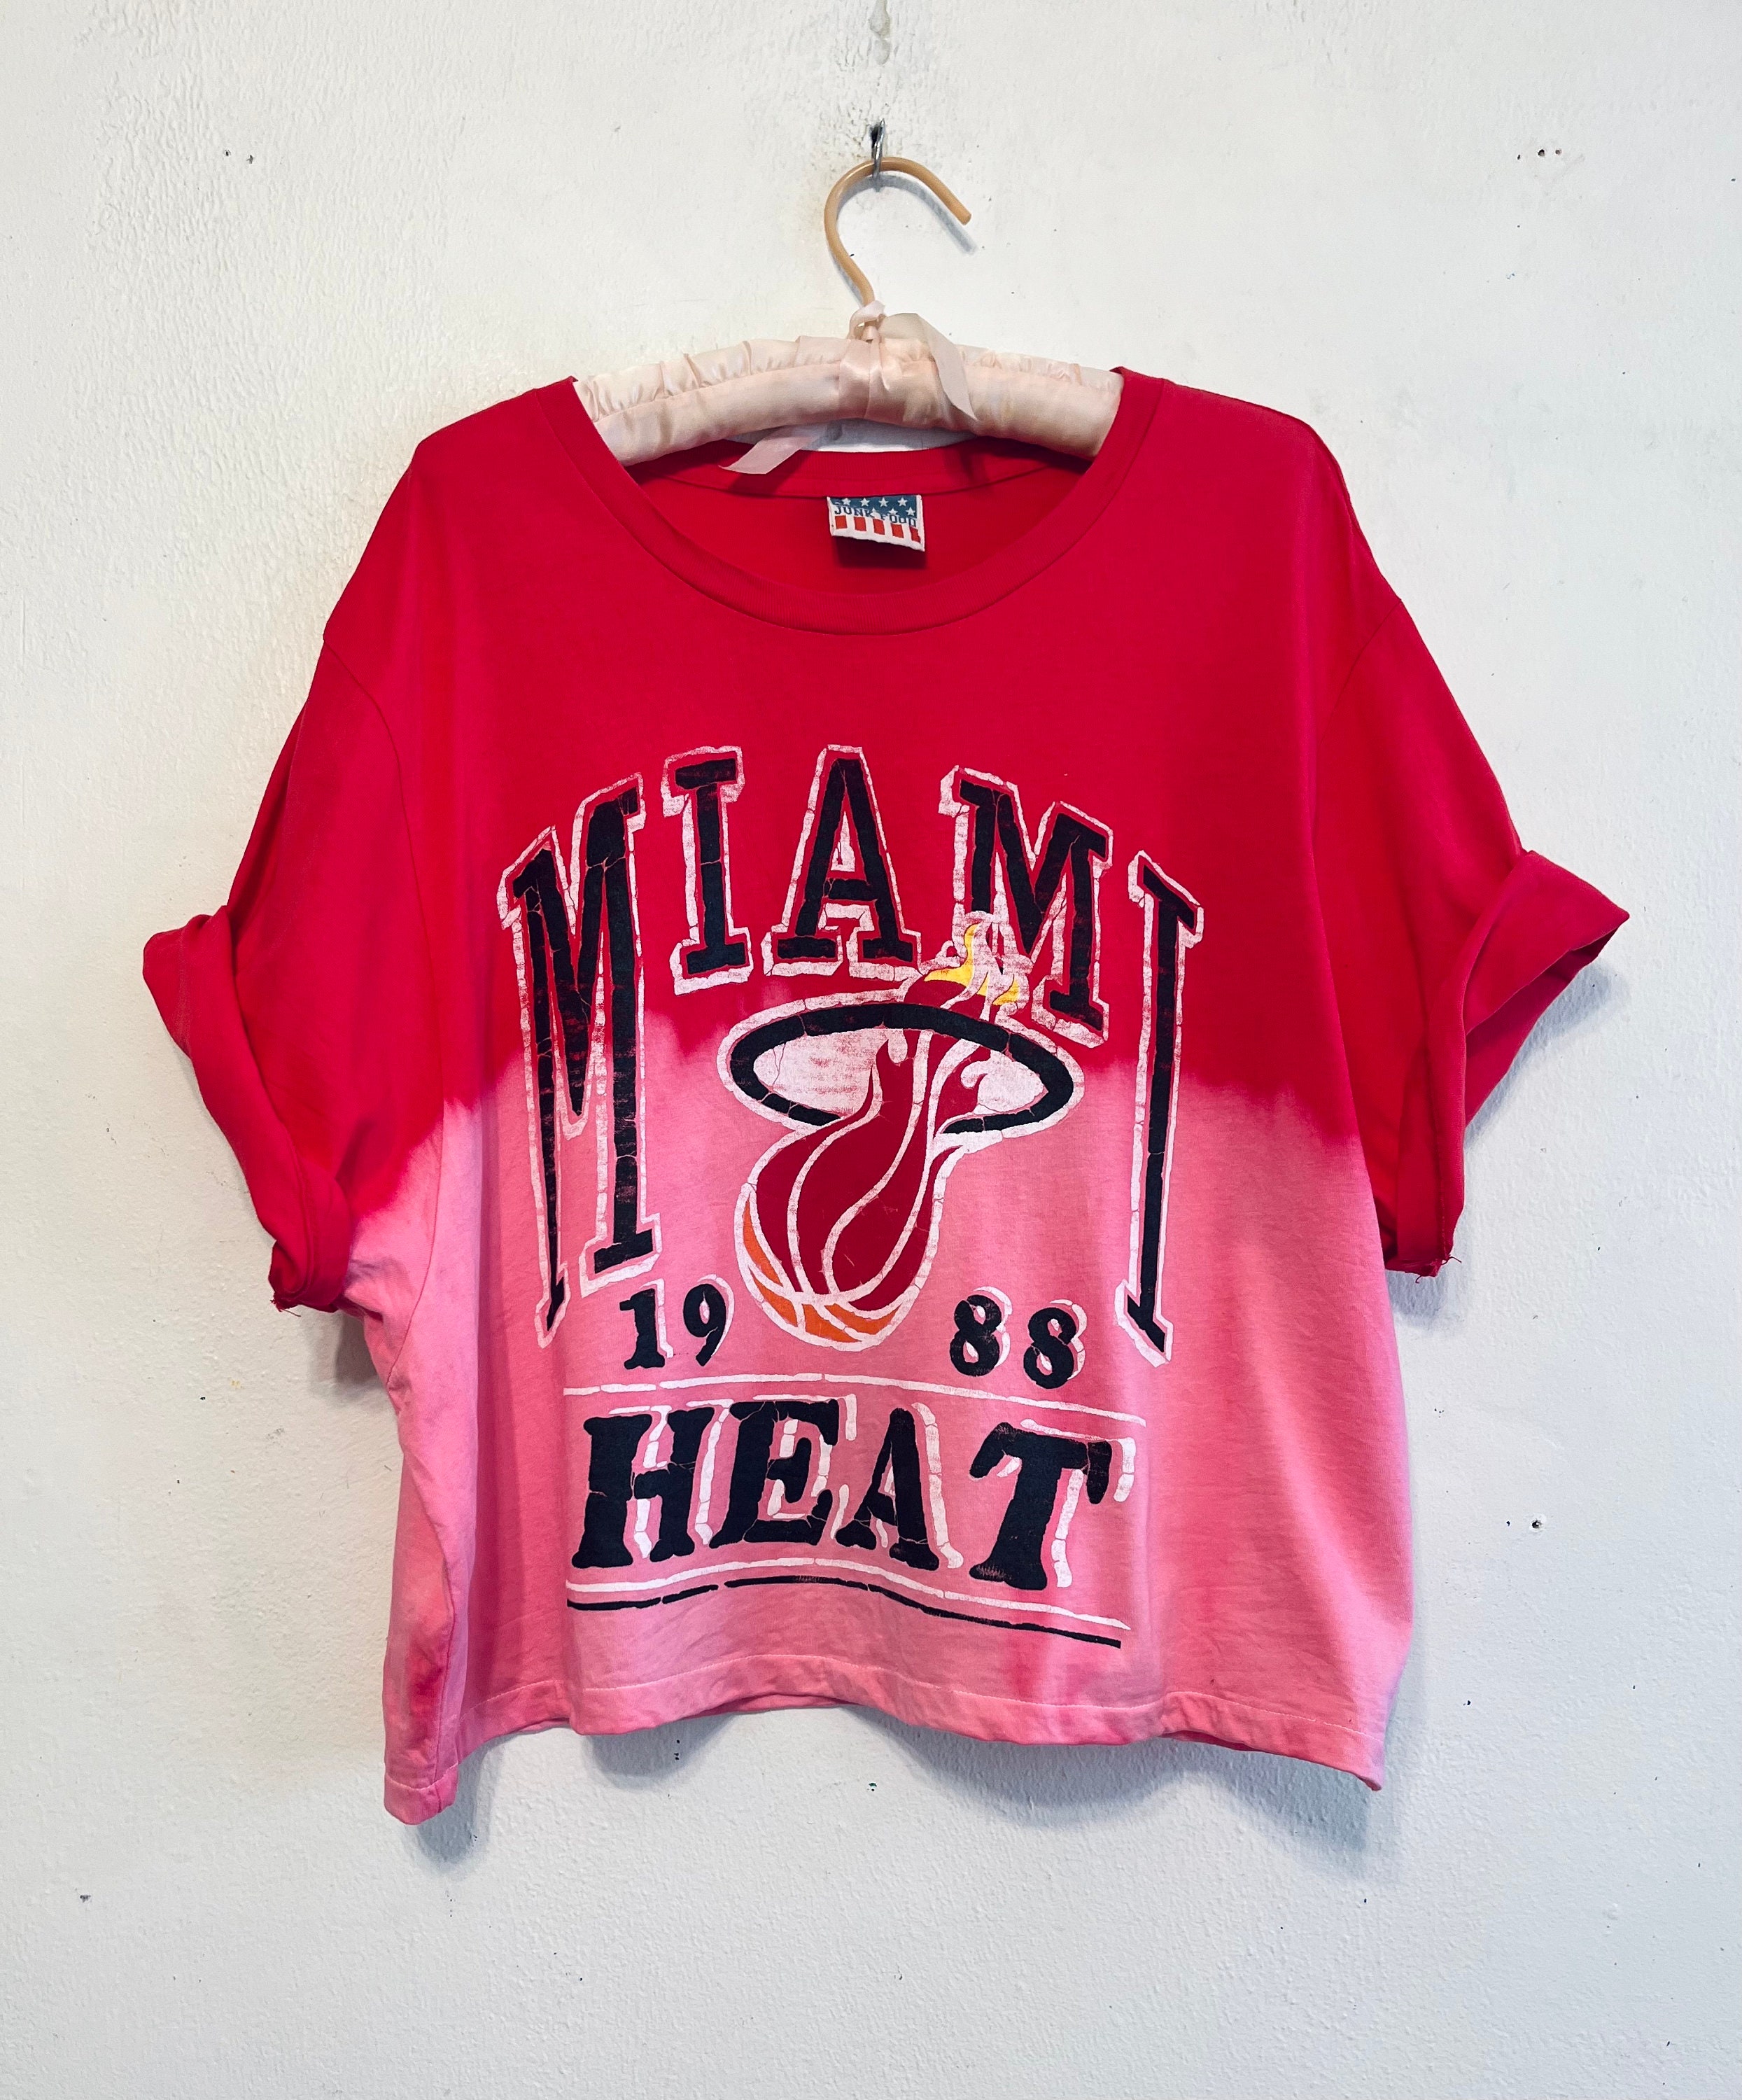 Indigo Woman Crop Top Licensed by the NBA Miami Heat Crew Neck Short Sleeve  T-Shirt 2798084